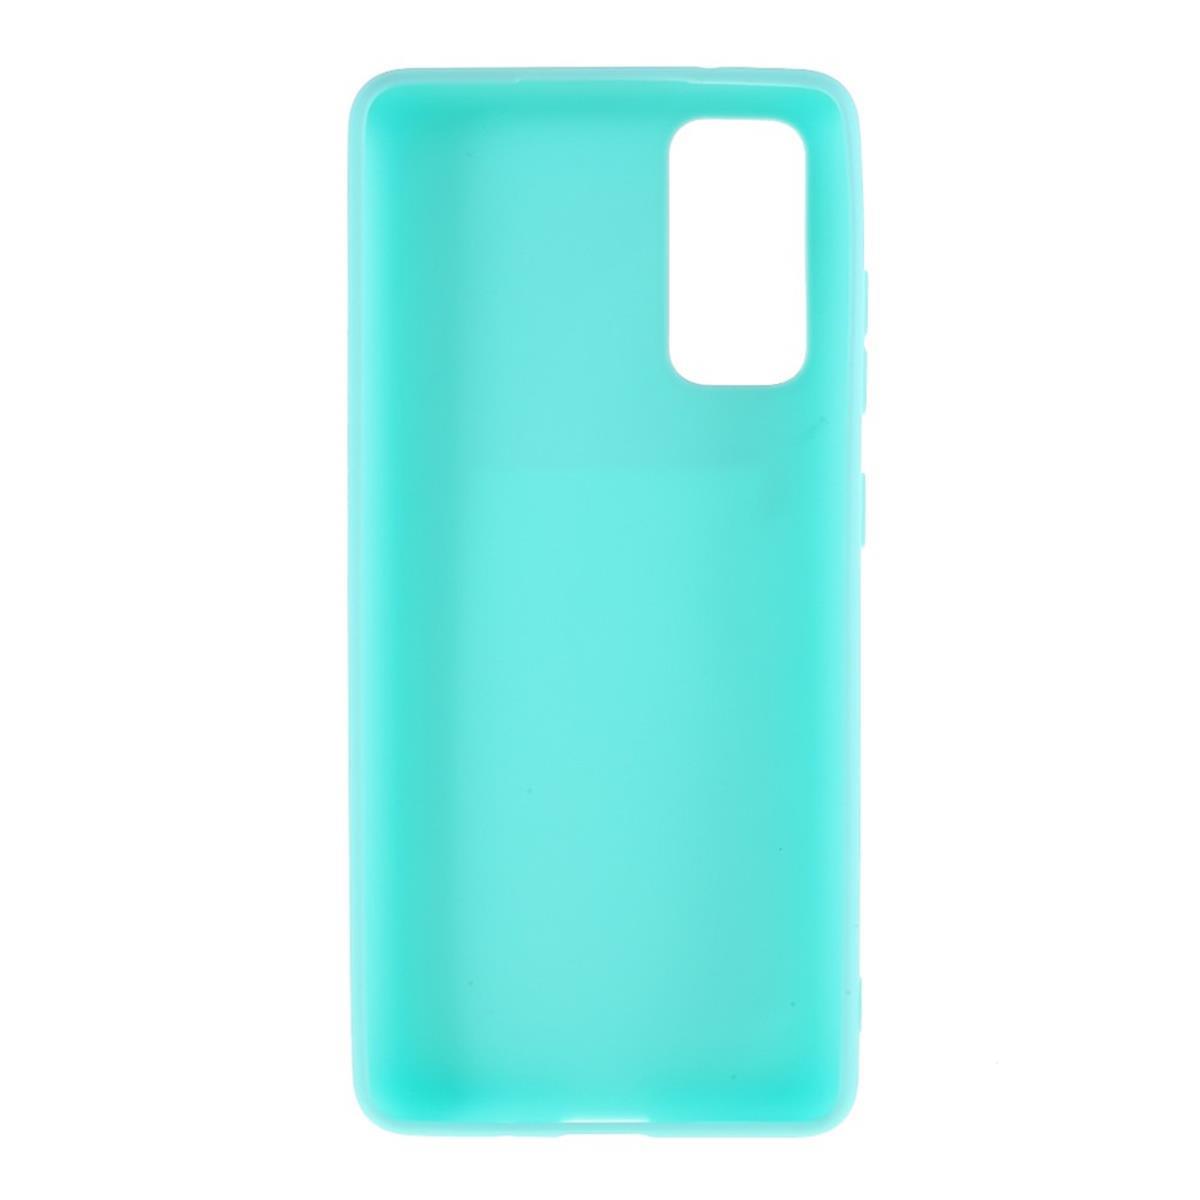 Hülle für Samsung Galaxy S20 FE Handyhülle Silikon Case Cover Schutzhülle Matt Grün